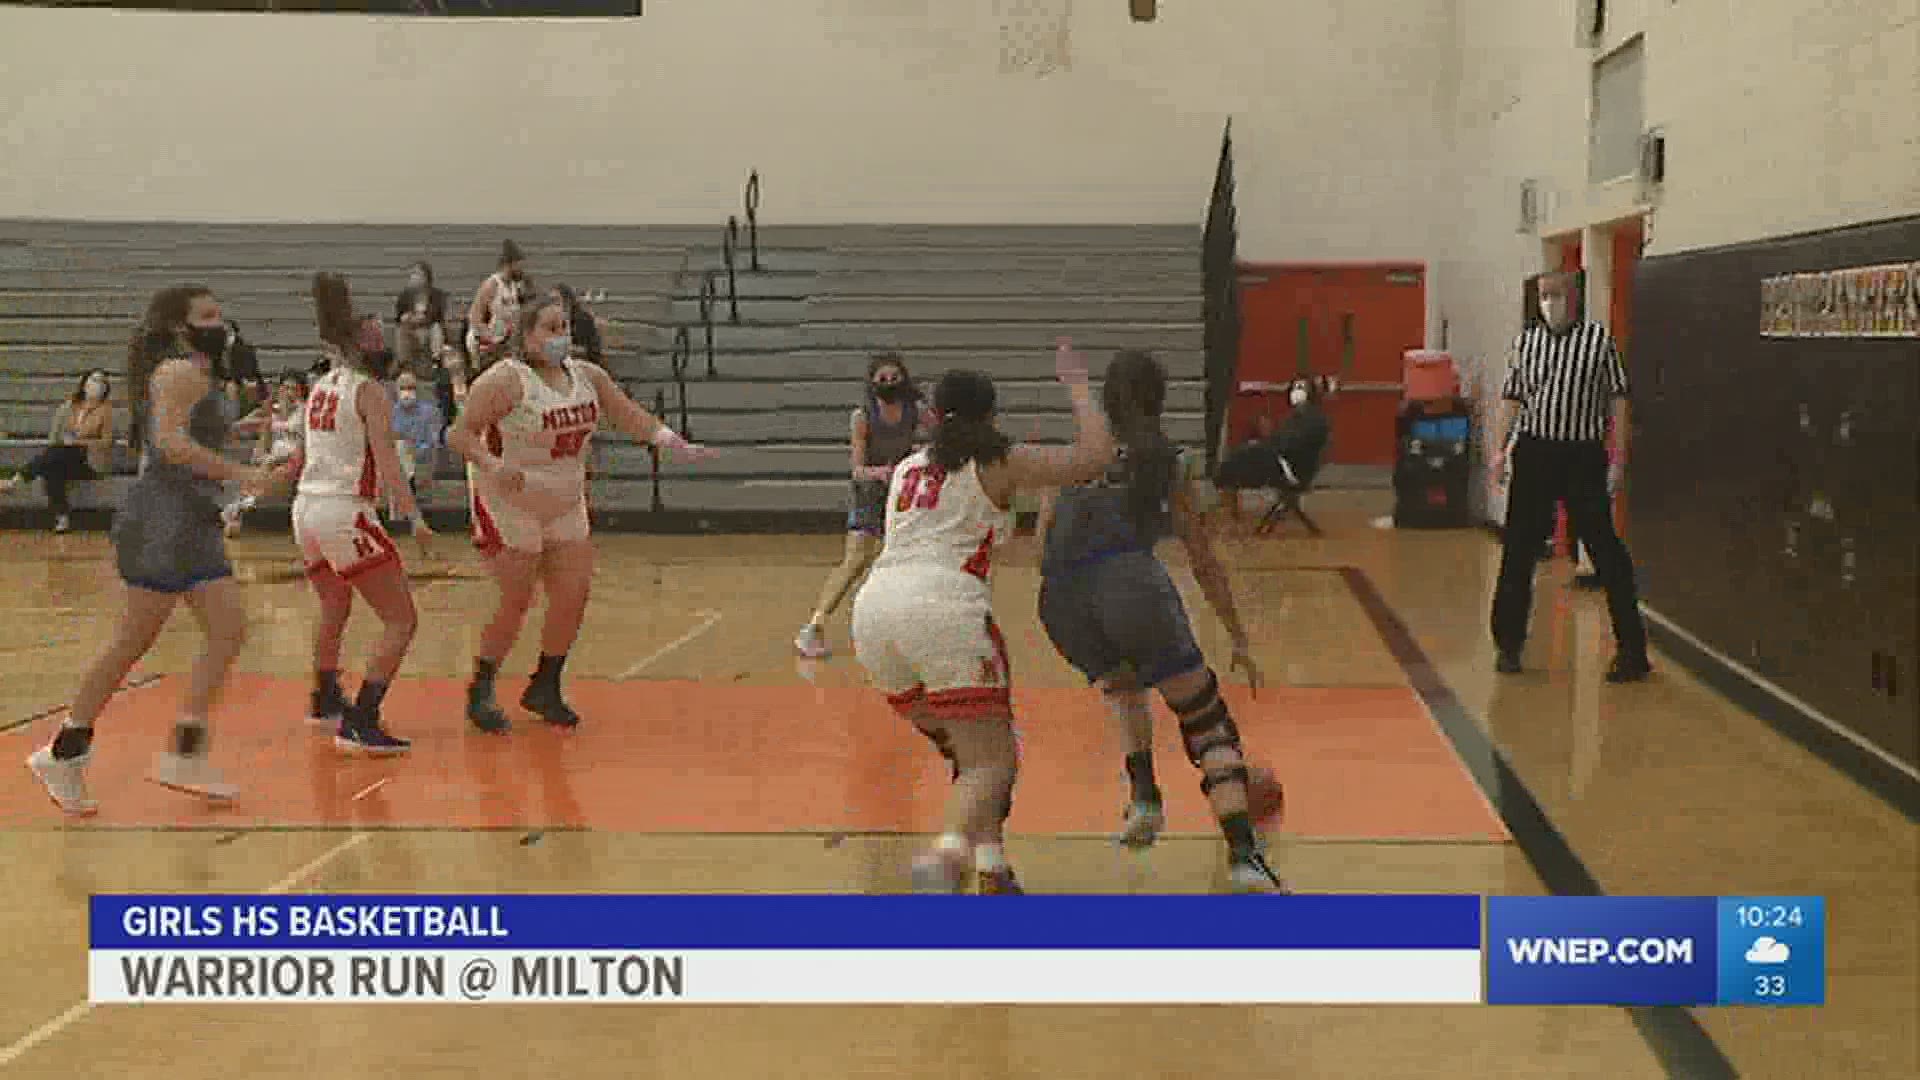 Warrior Run wins 45-36 in girls basketball over Milton